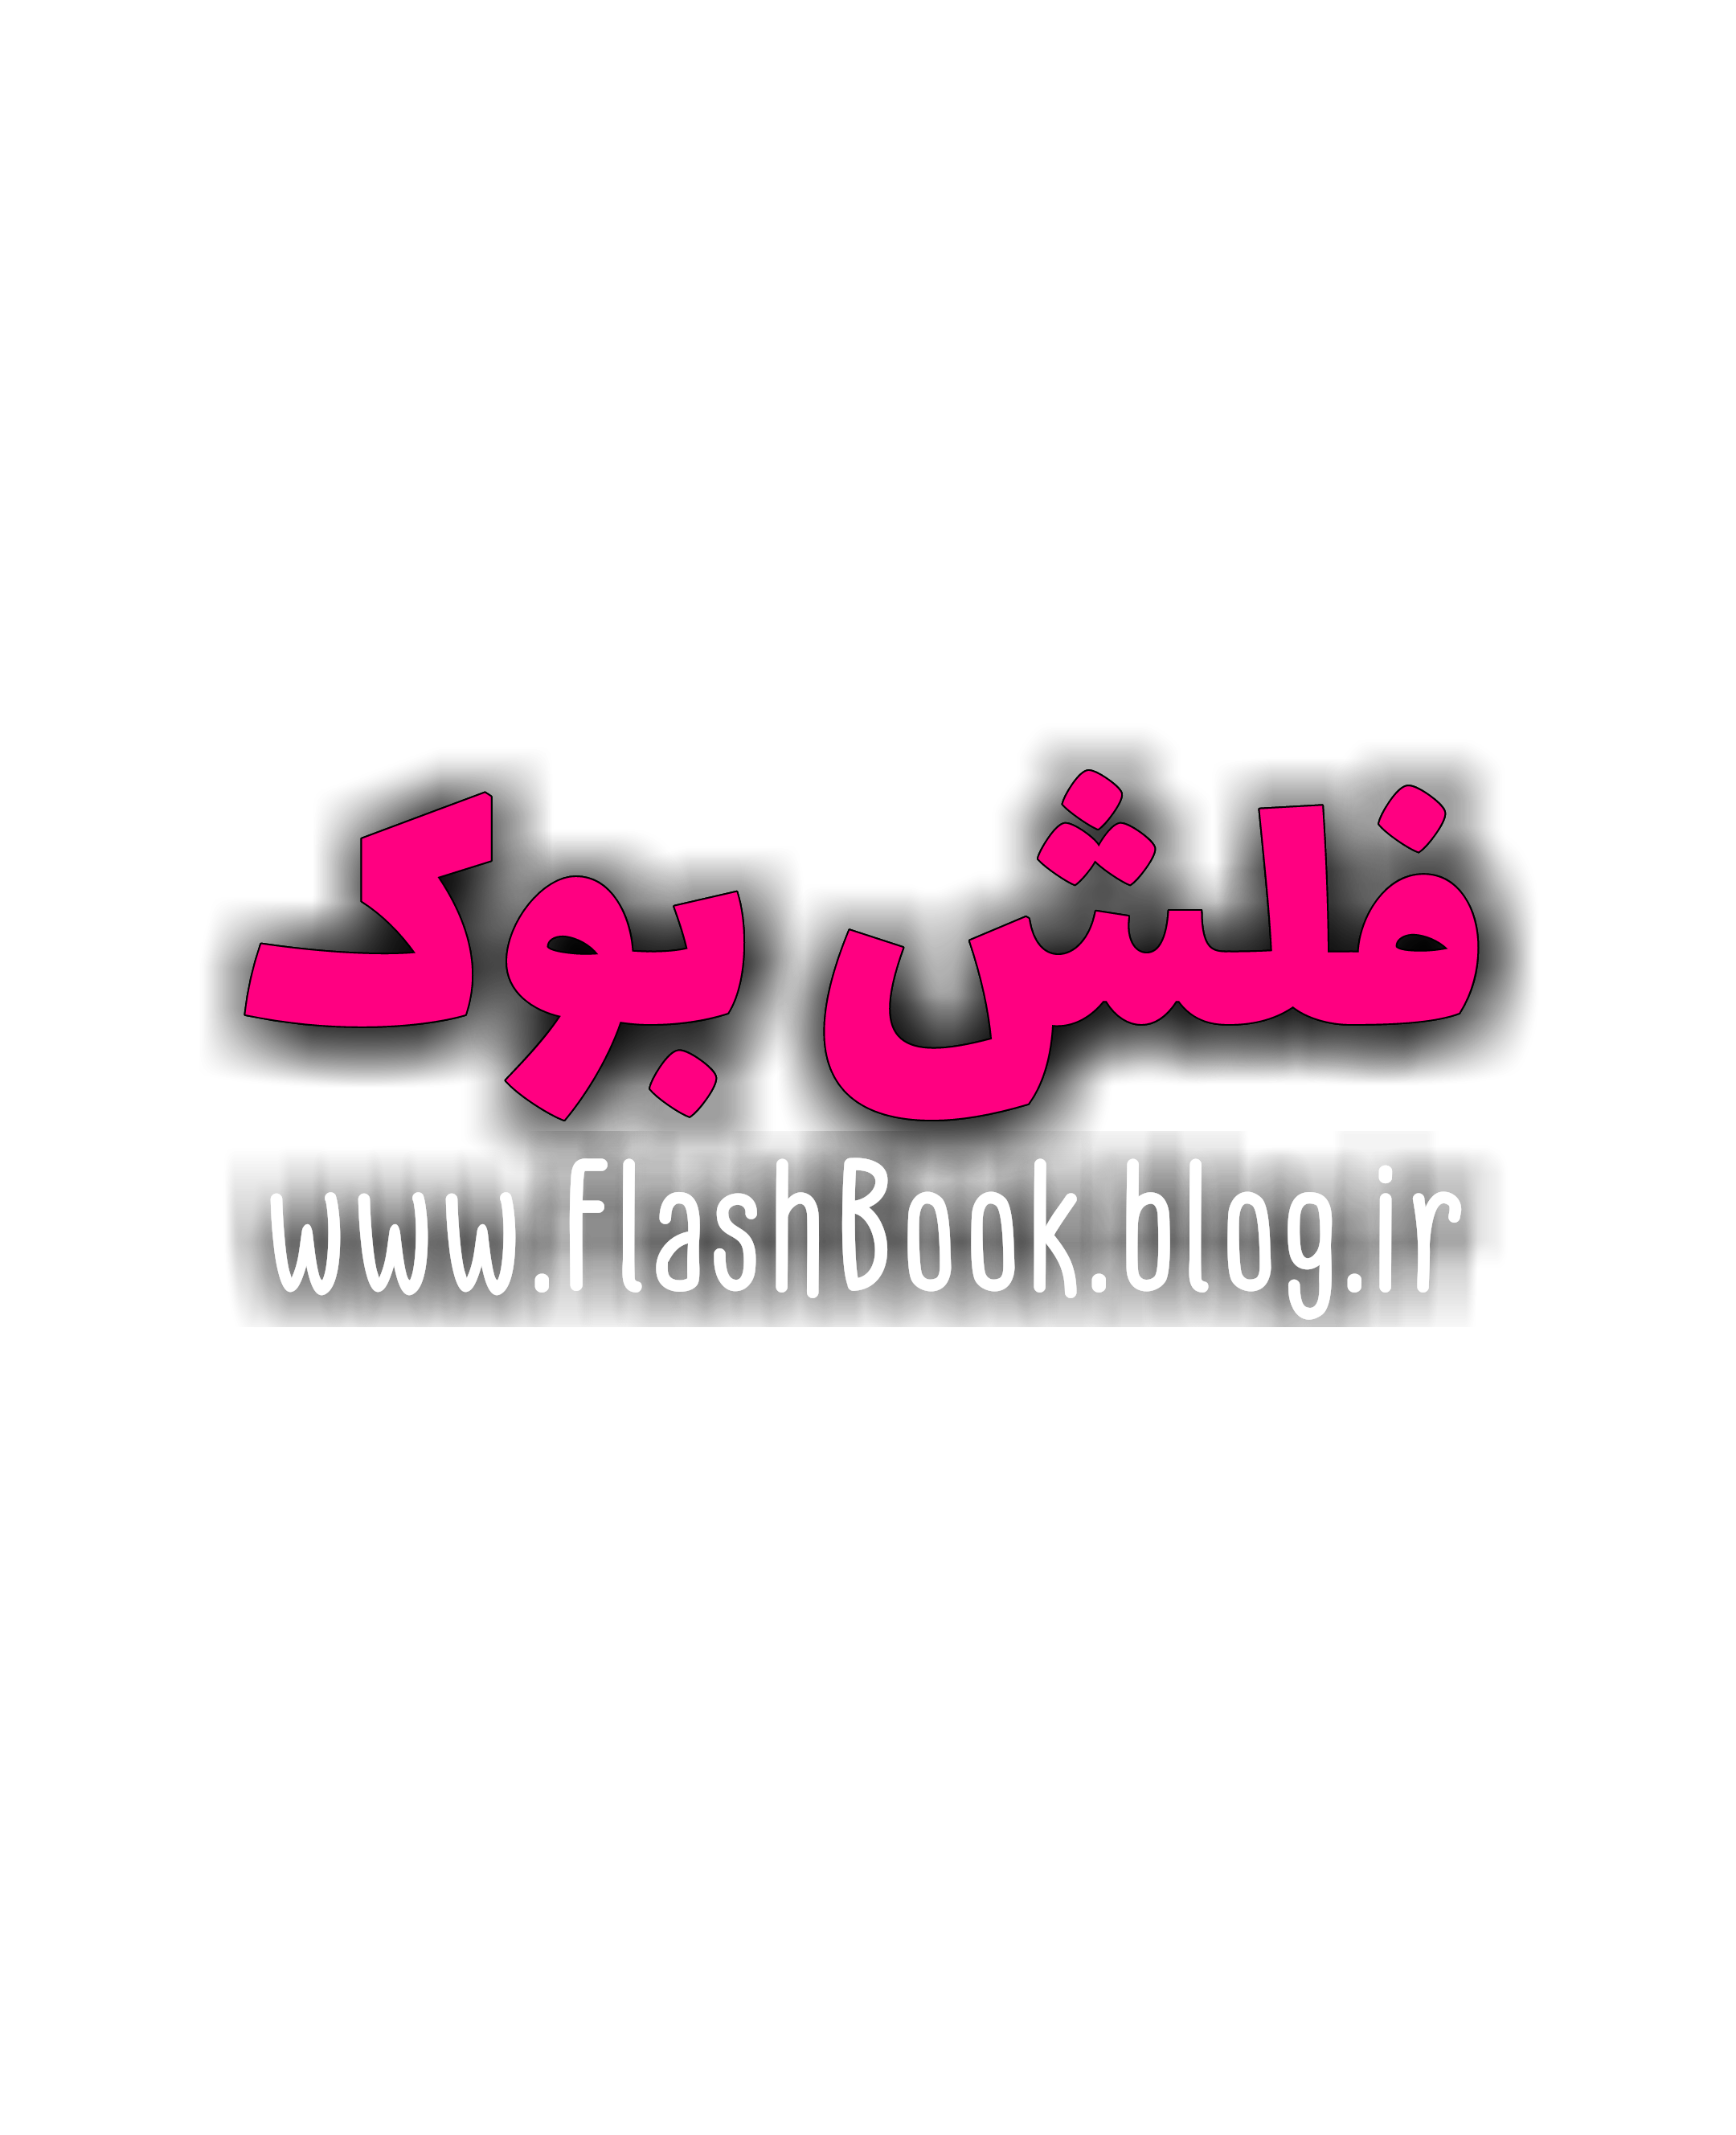 لوگو وبلاگ فلش بوک (1)